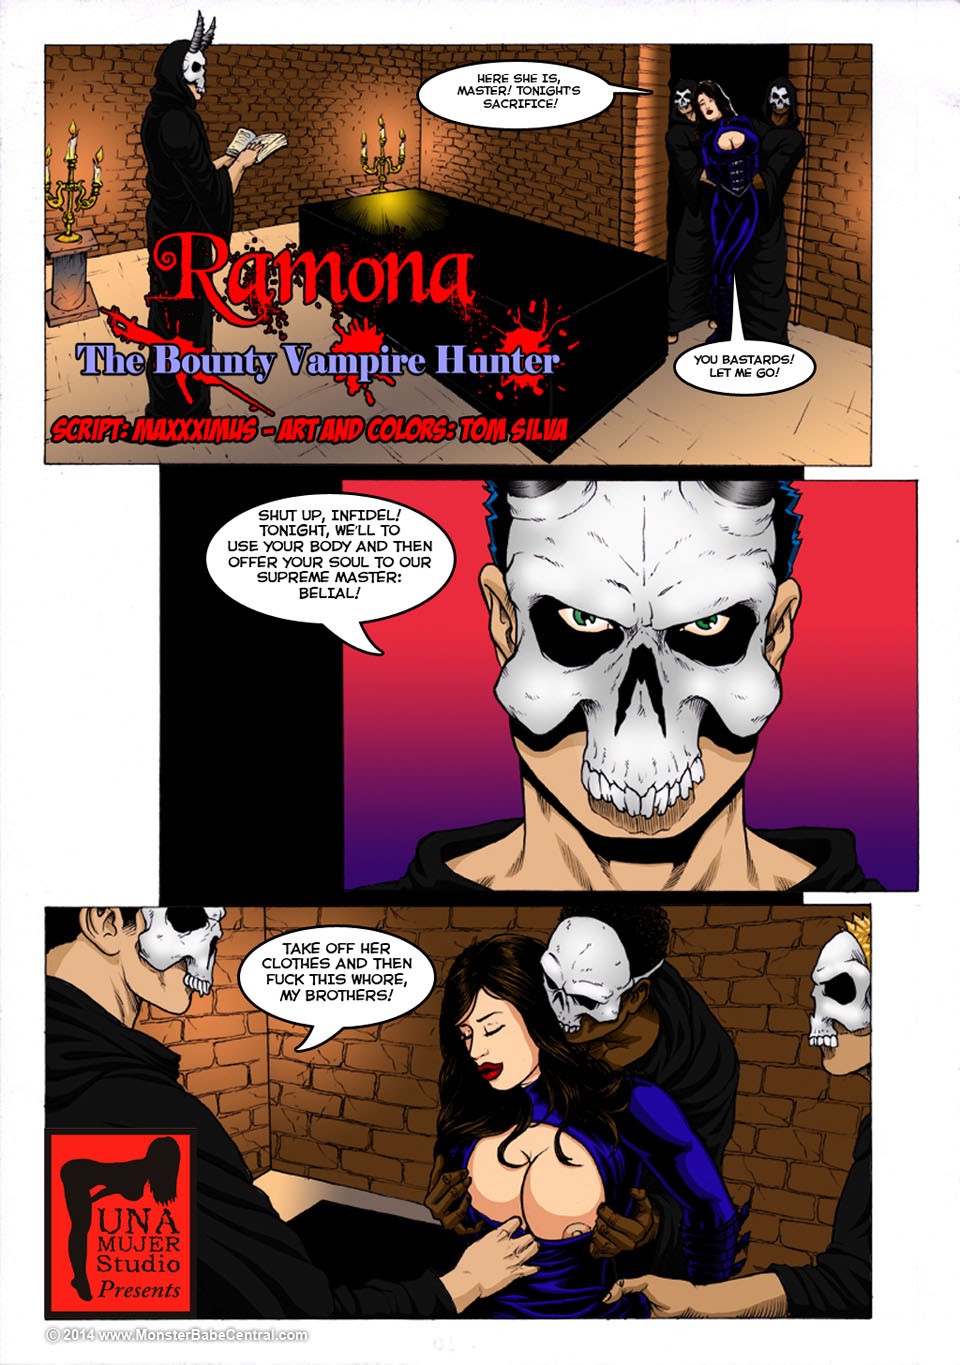 Ramona. The Bounty Vampire Hunter